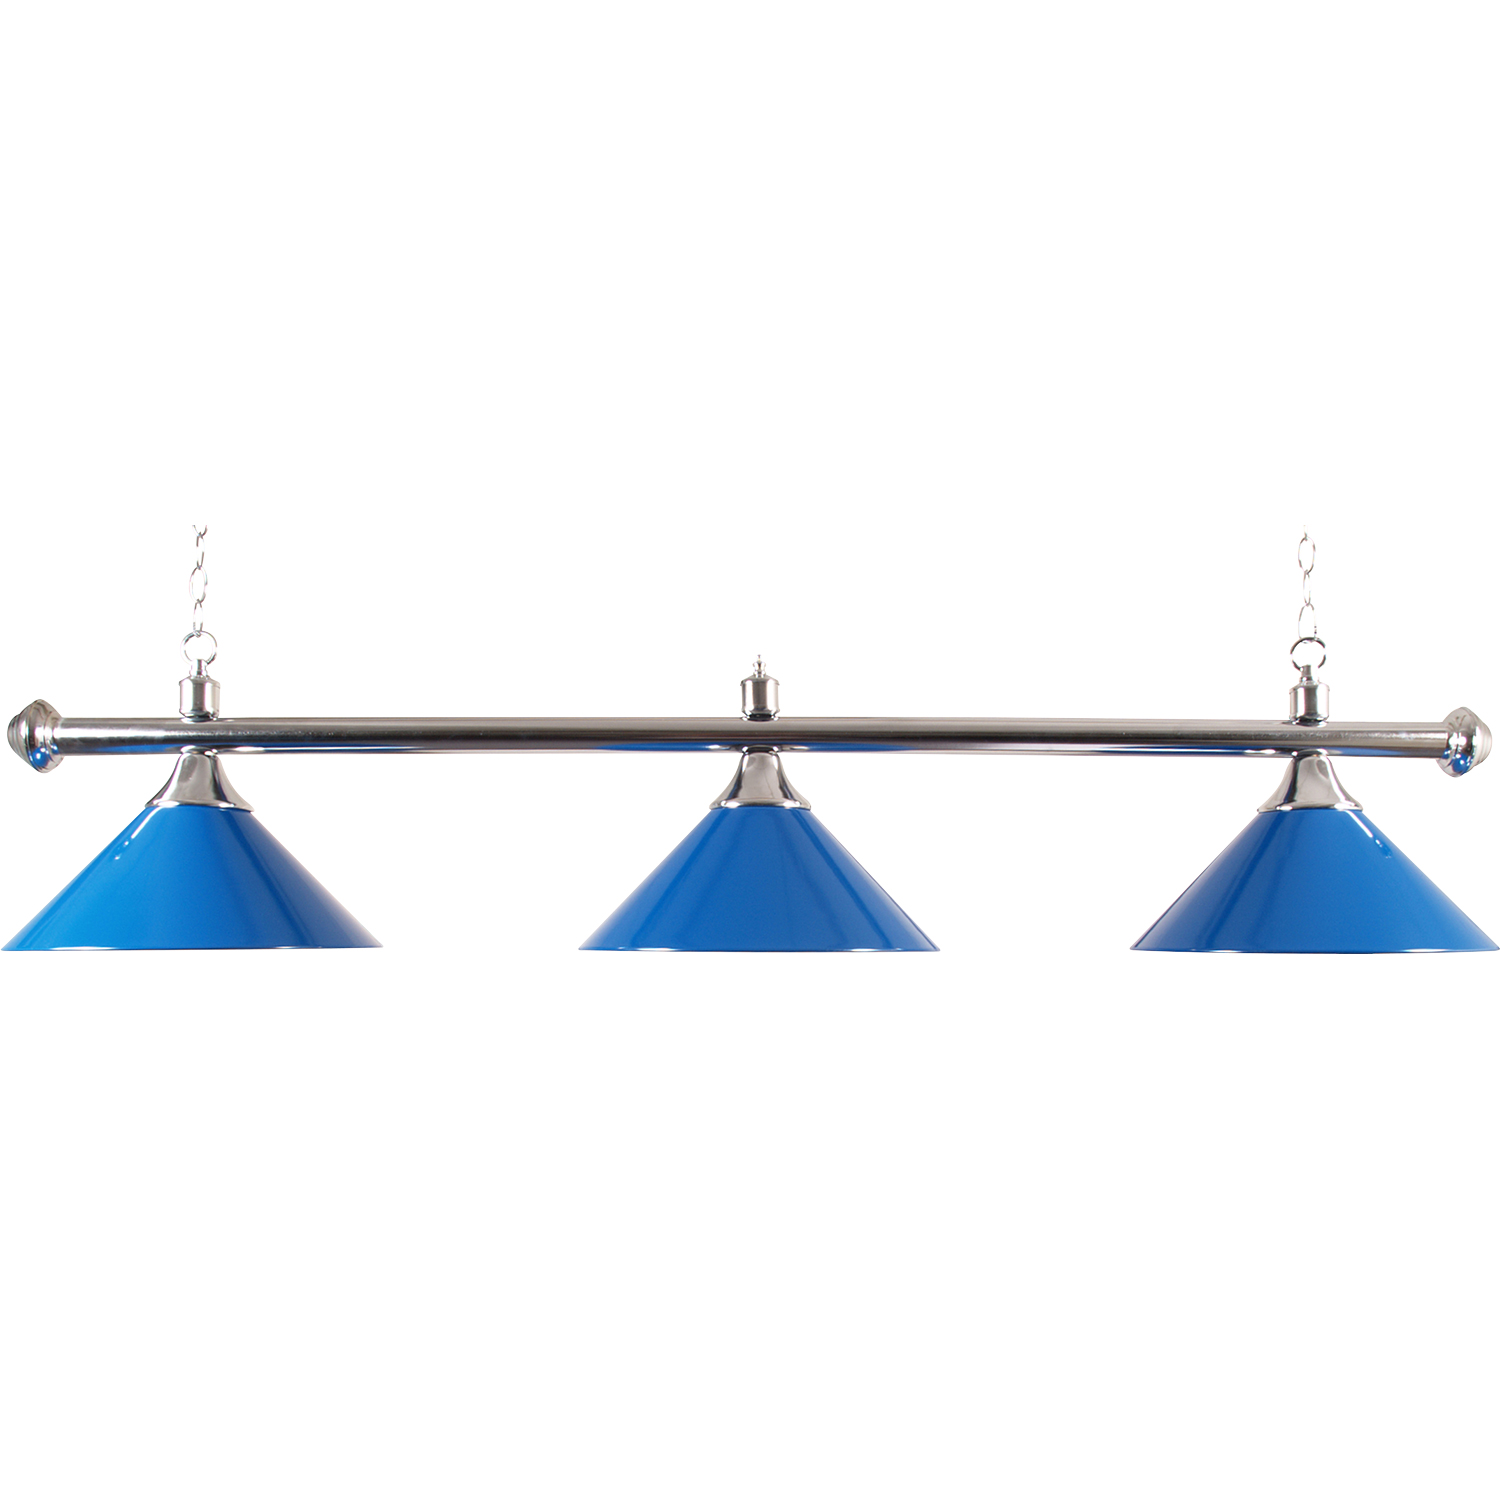 Billiard lamp pool with three shades, blue